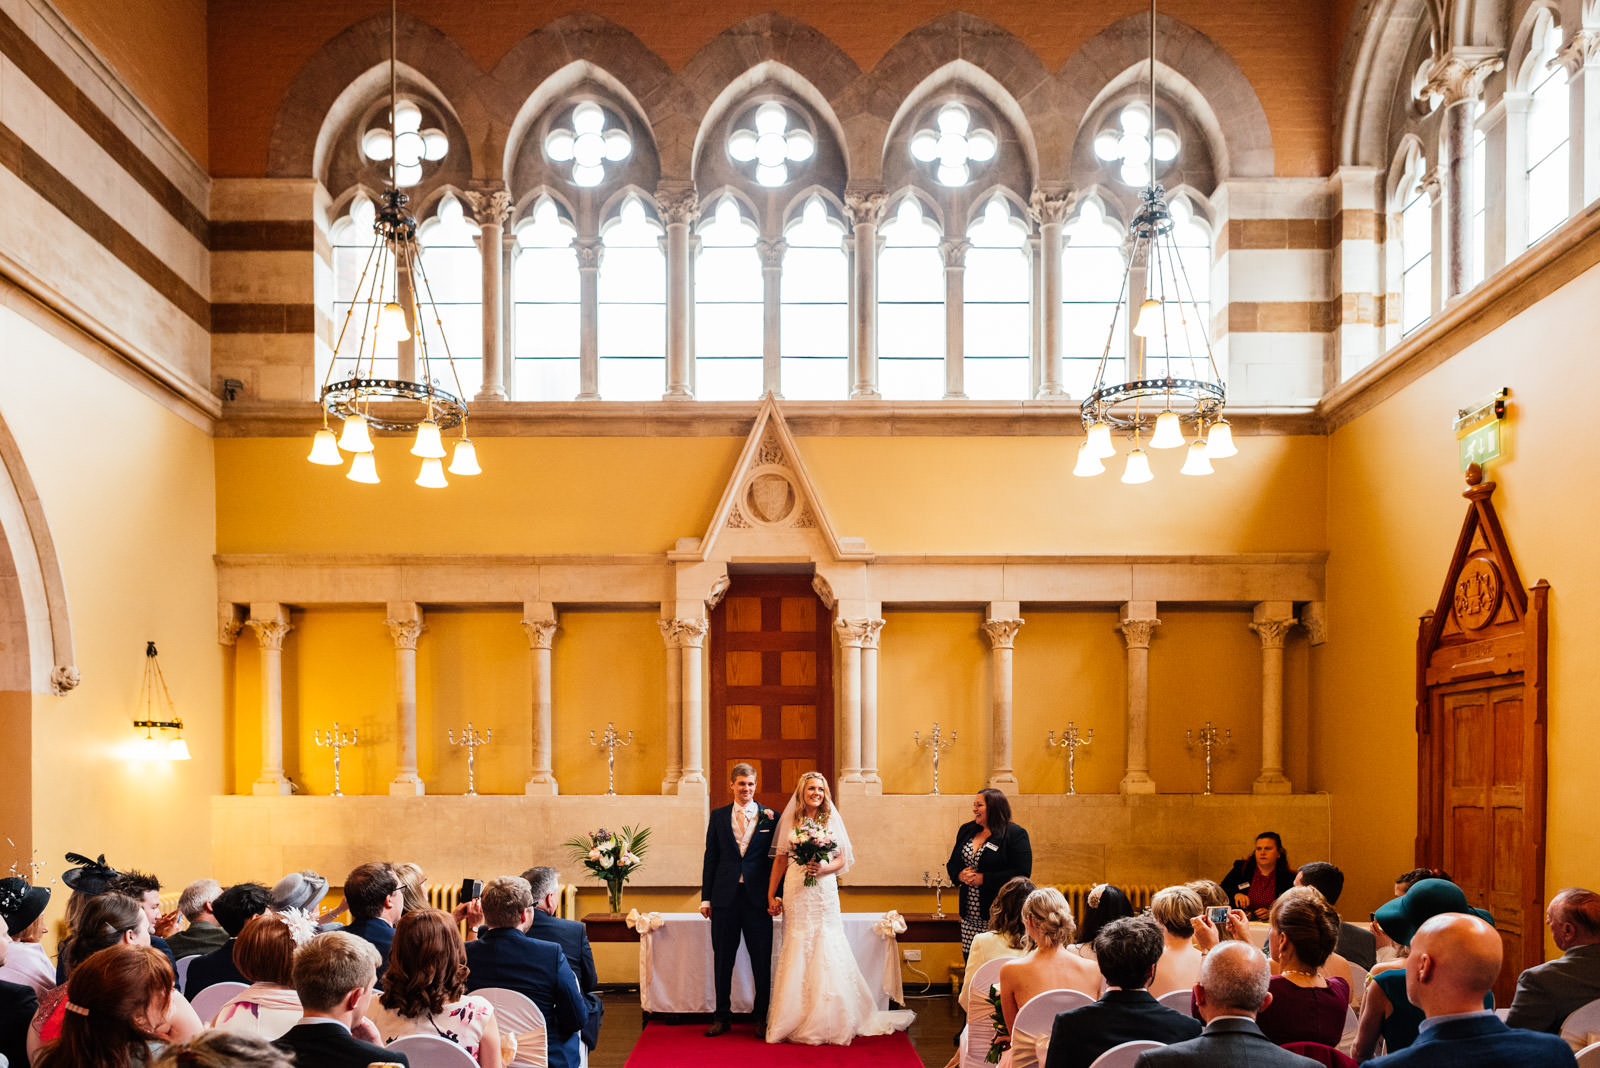 Northampton Guildhall wedding ceremony